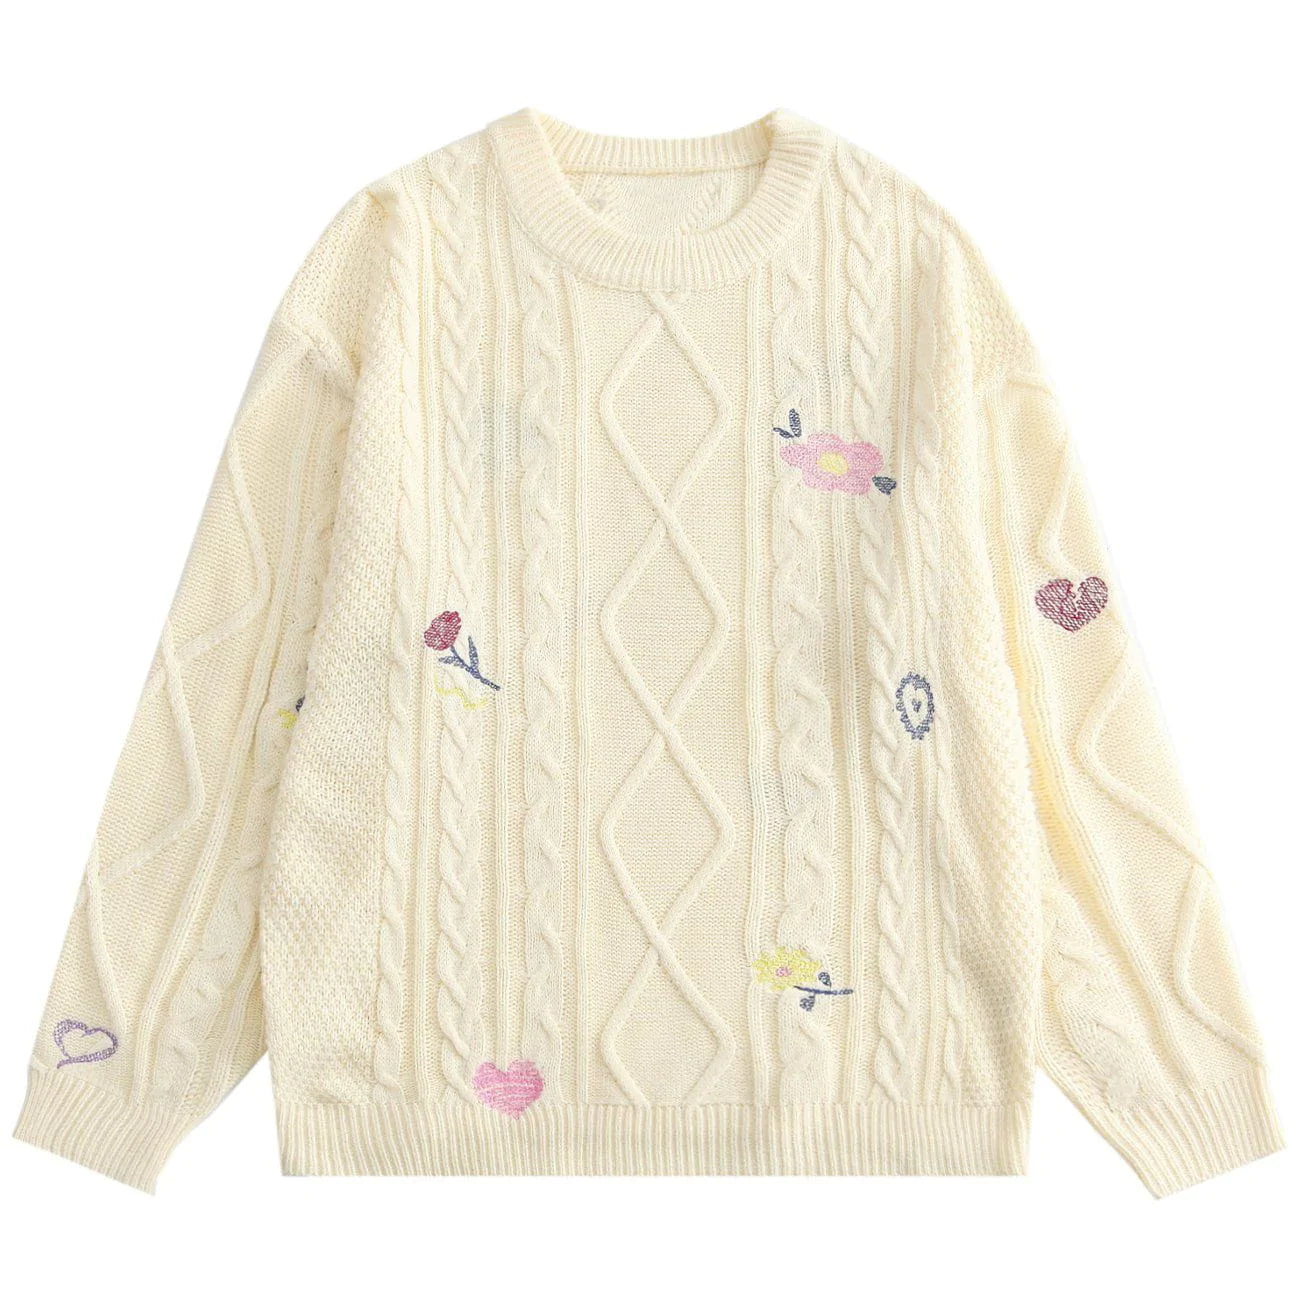 Faire Echo Embroidery Flower Heart Knit Sweater Faire Echo